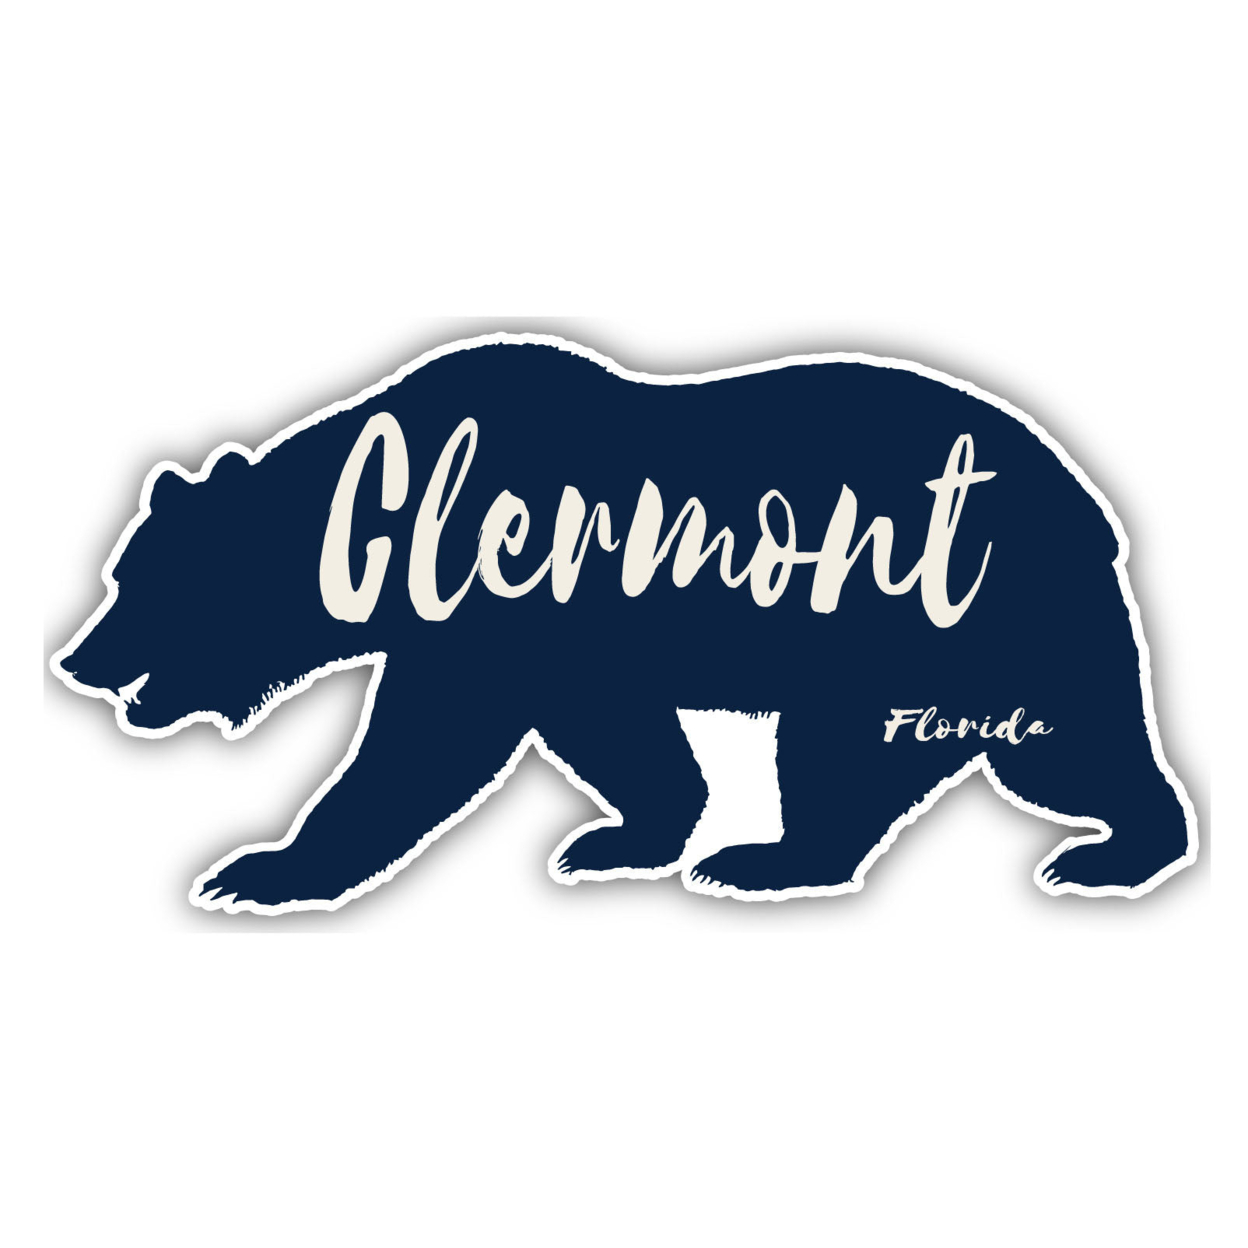 Clermont Florida Souvenir Decorative Stickers (Choose Theme And Size) - Single Unit, 10-Inch, Bear